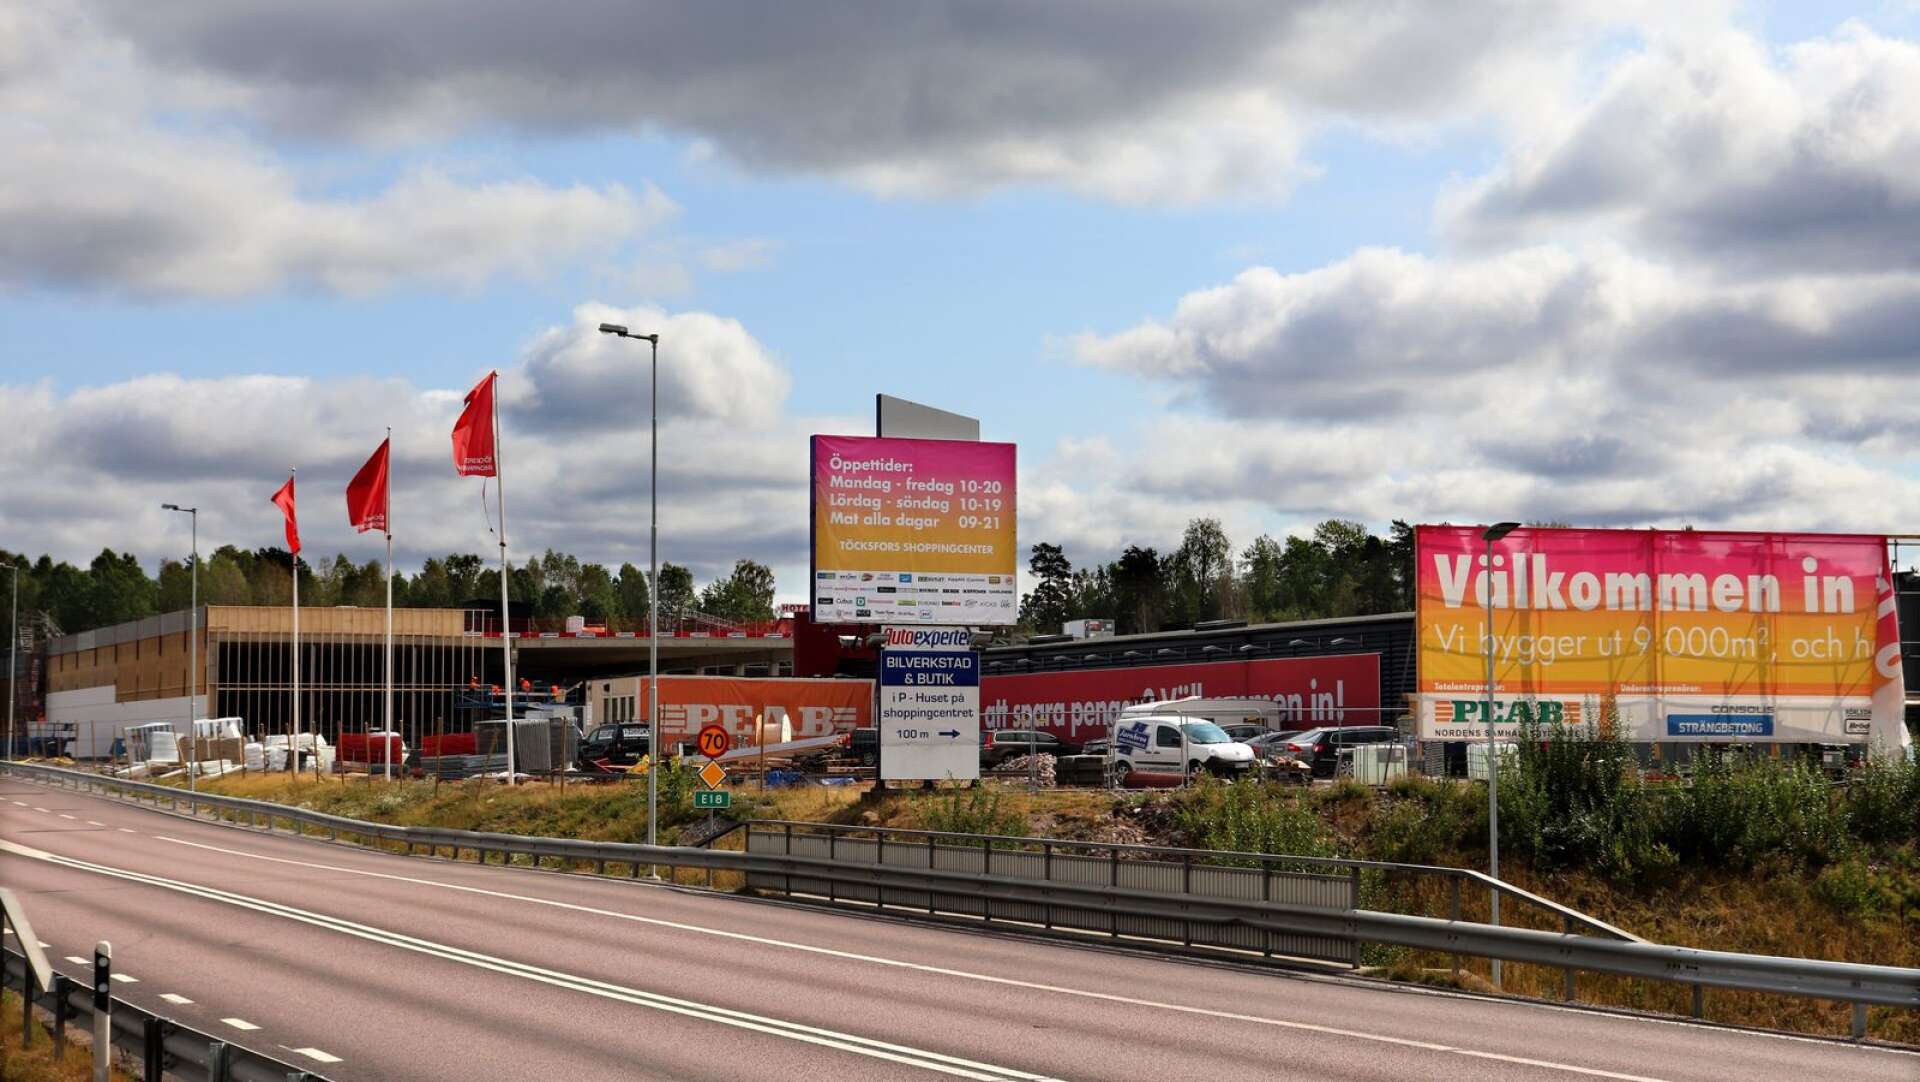 Töcksfors Shoppingcenter bygger ut och nyöppnar under våren 2019.